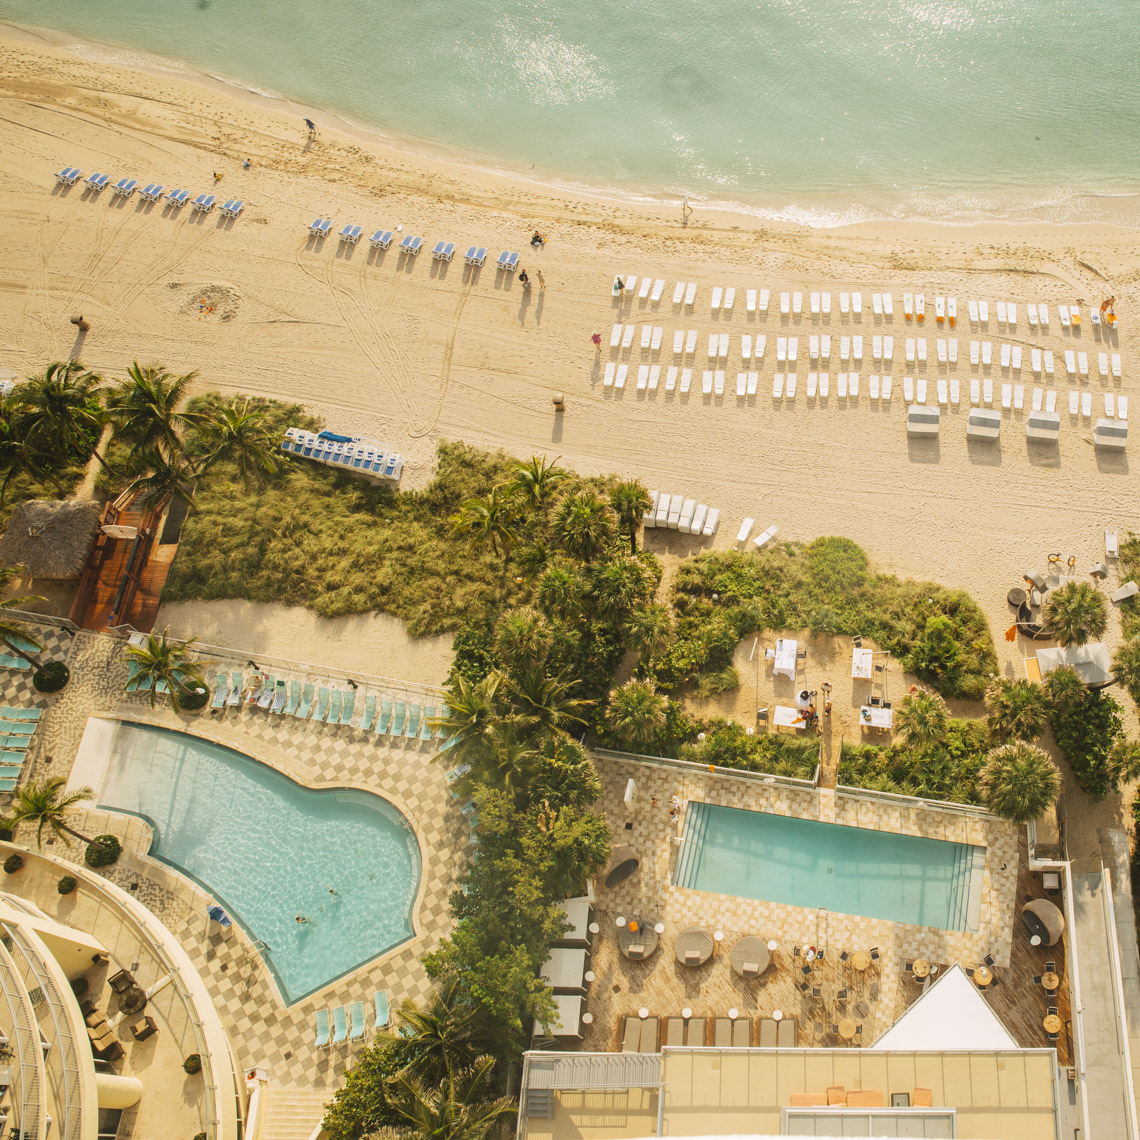 Overhead view of hotel resort pool by beach and ocean